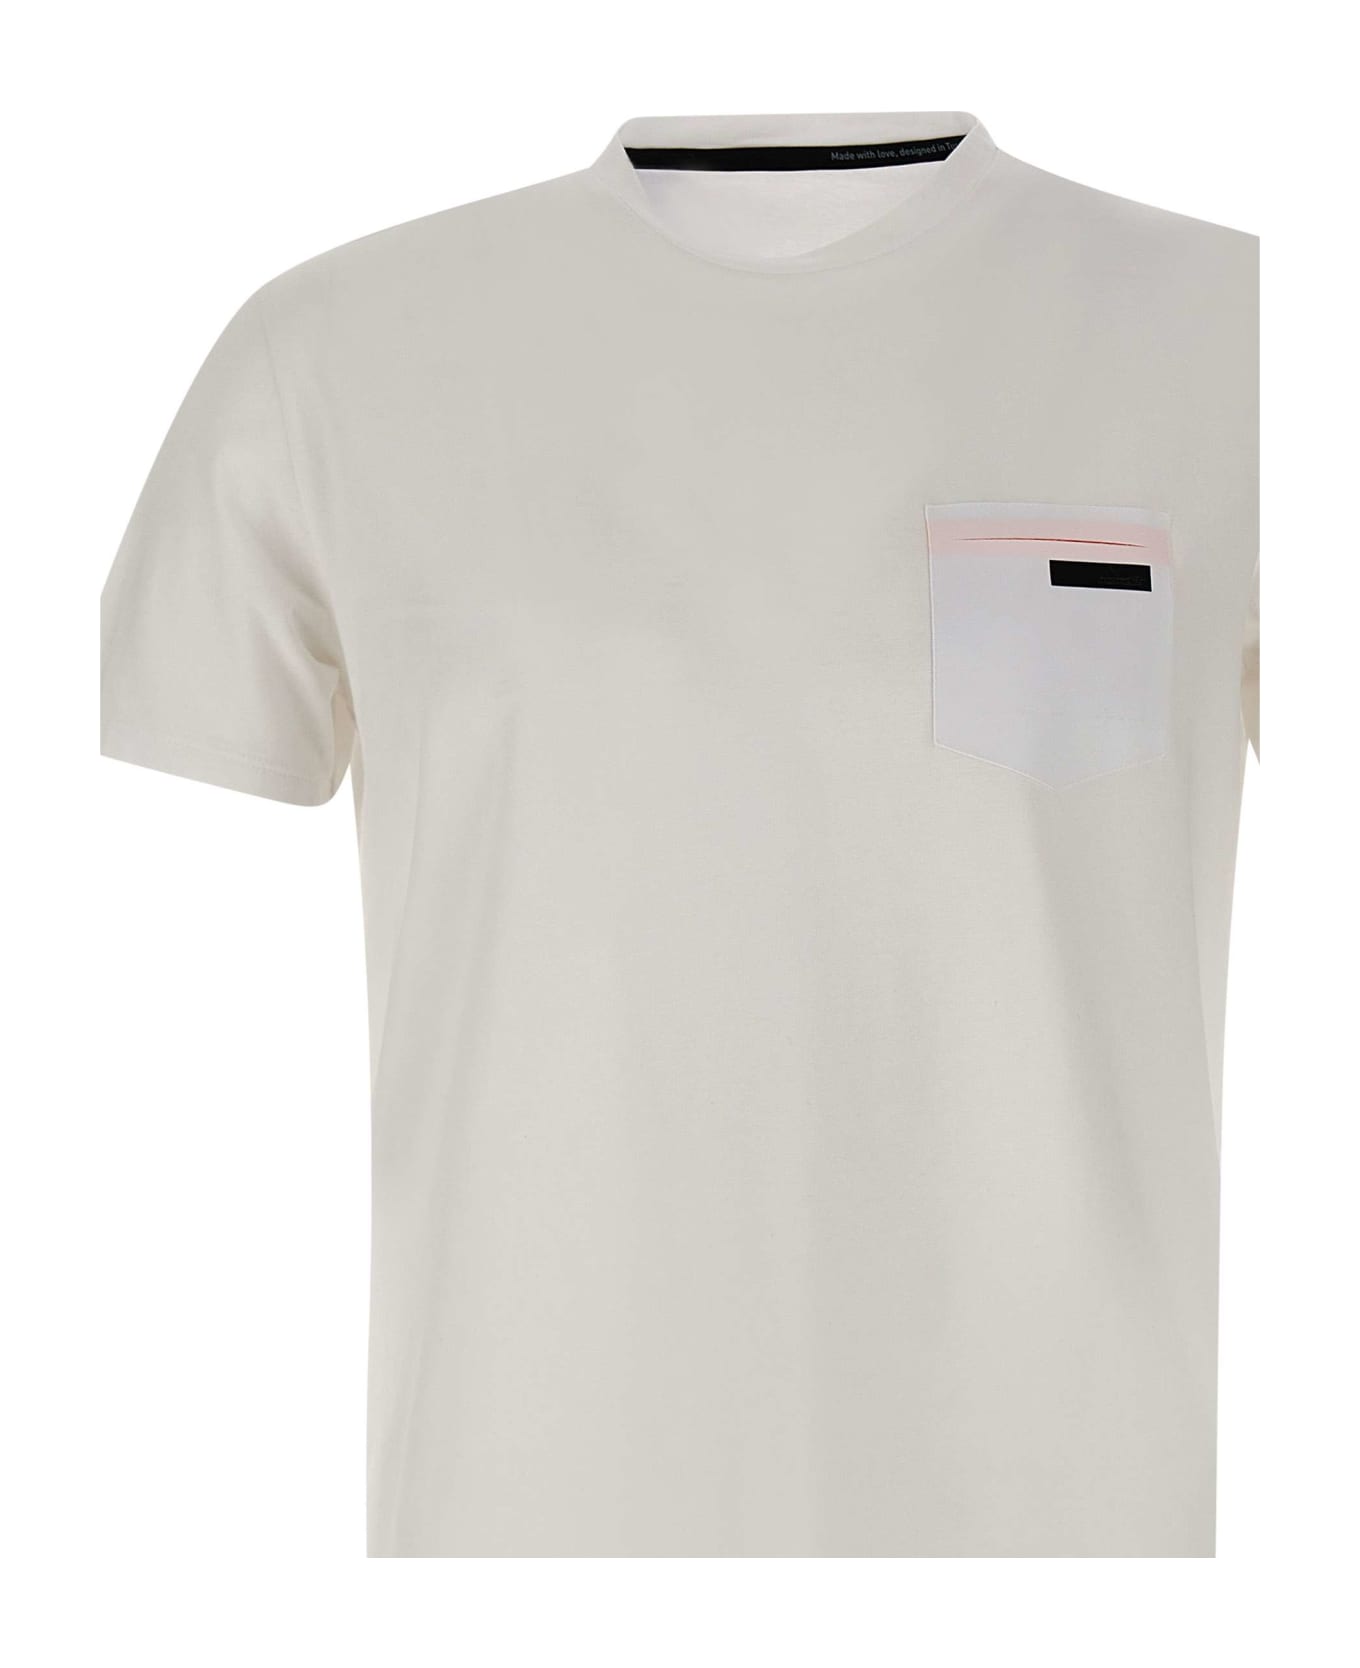 RRD - Roberto Ricci Design 'revo Shirty' T-shirt - White